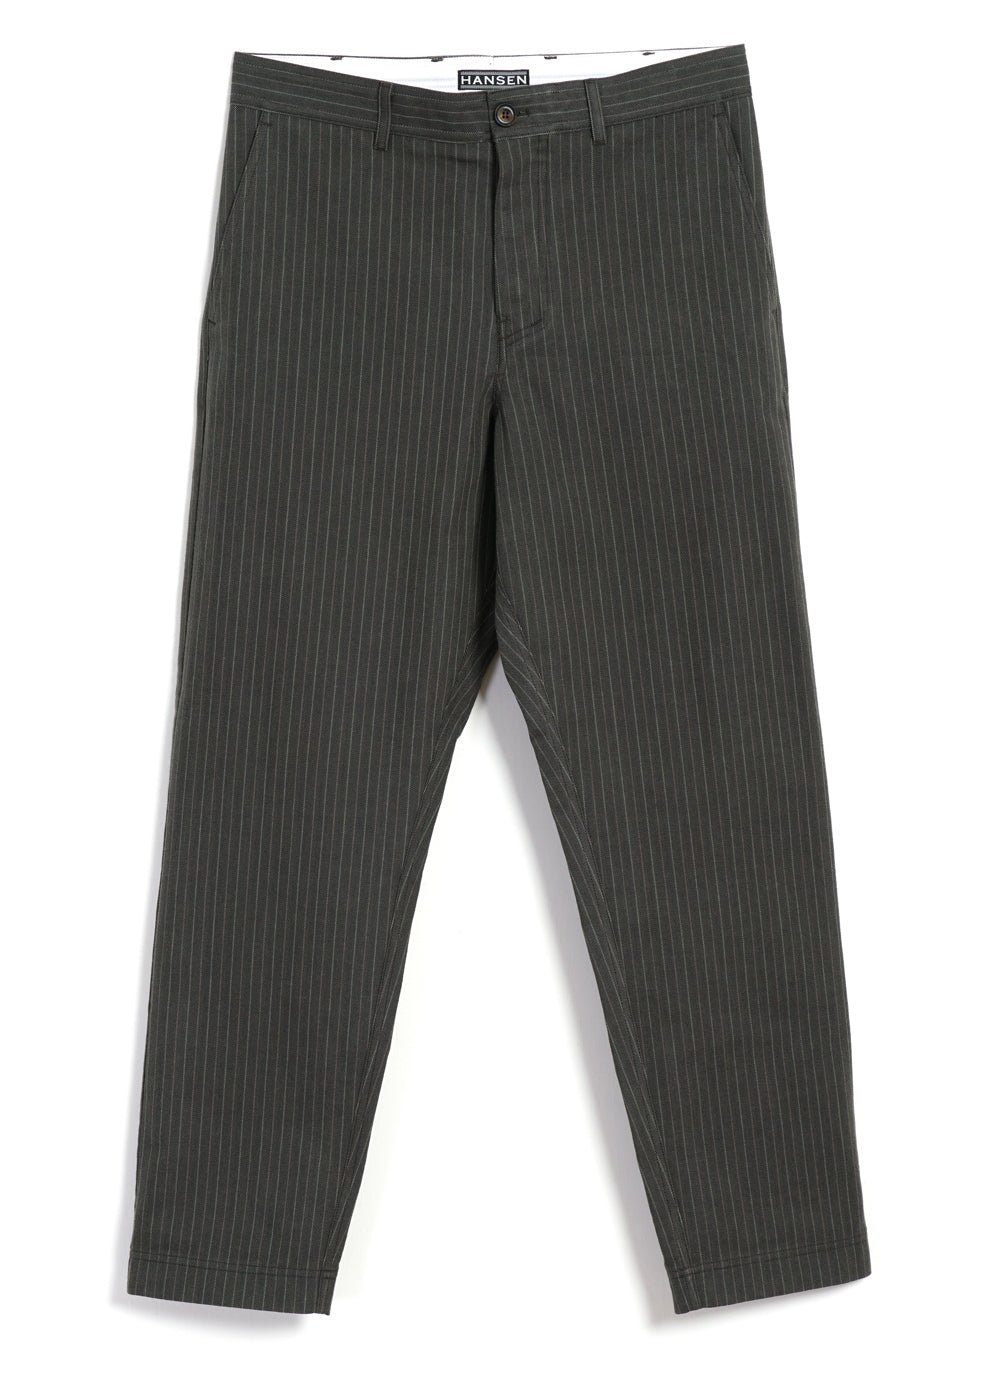 Grey Linen Pant With Pocket Detail - Bottoms - Terra Cotta Gorge Co.